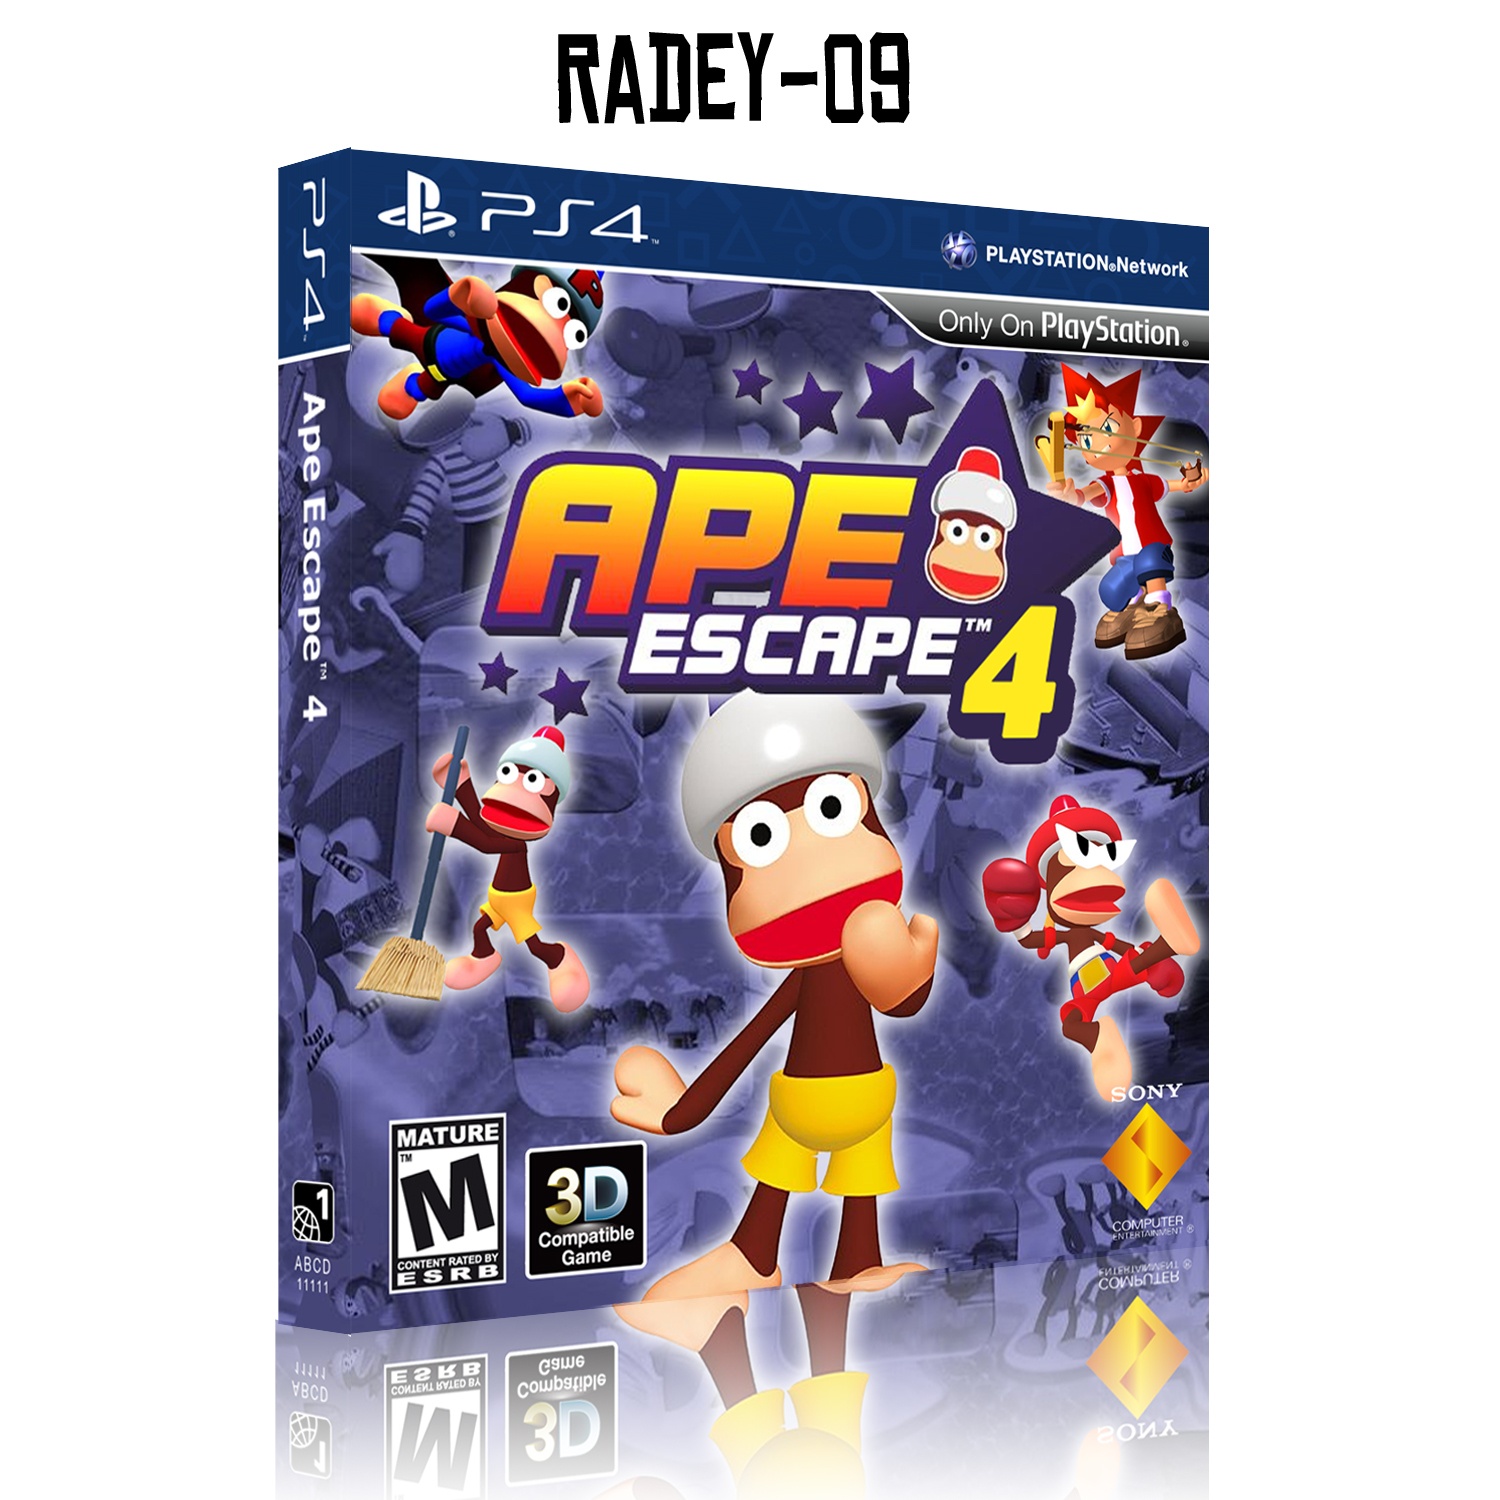 Ape Escape 4 PlayStation 4 Box Art Cover by radey-09